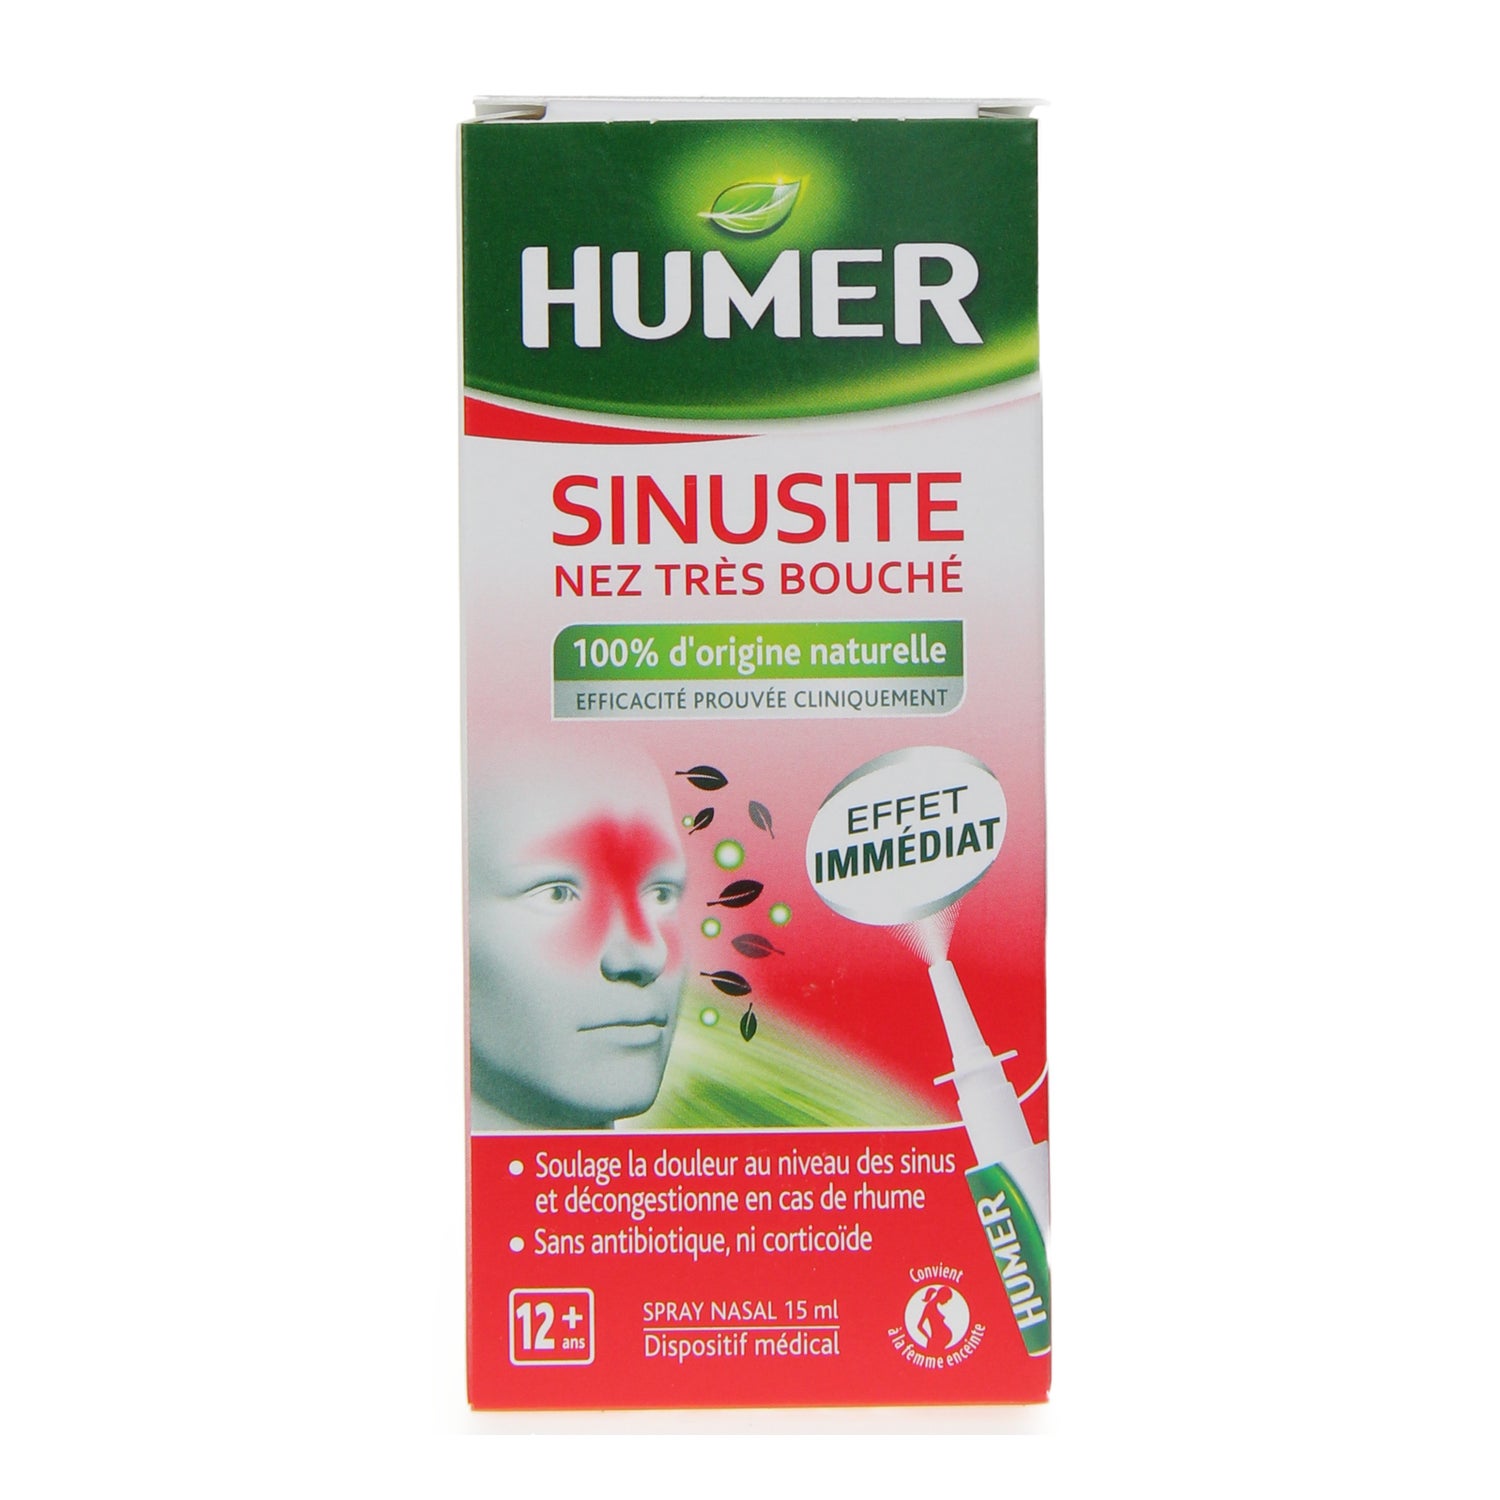 Humer Sinusite 15ml